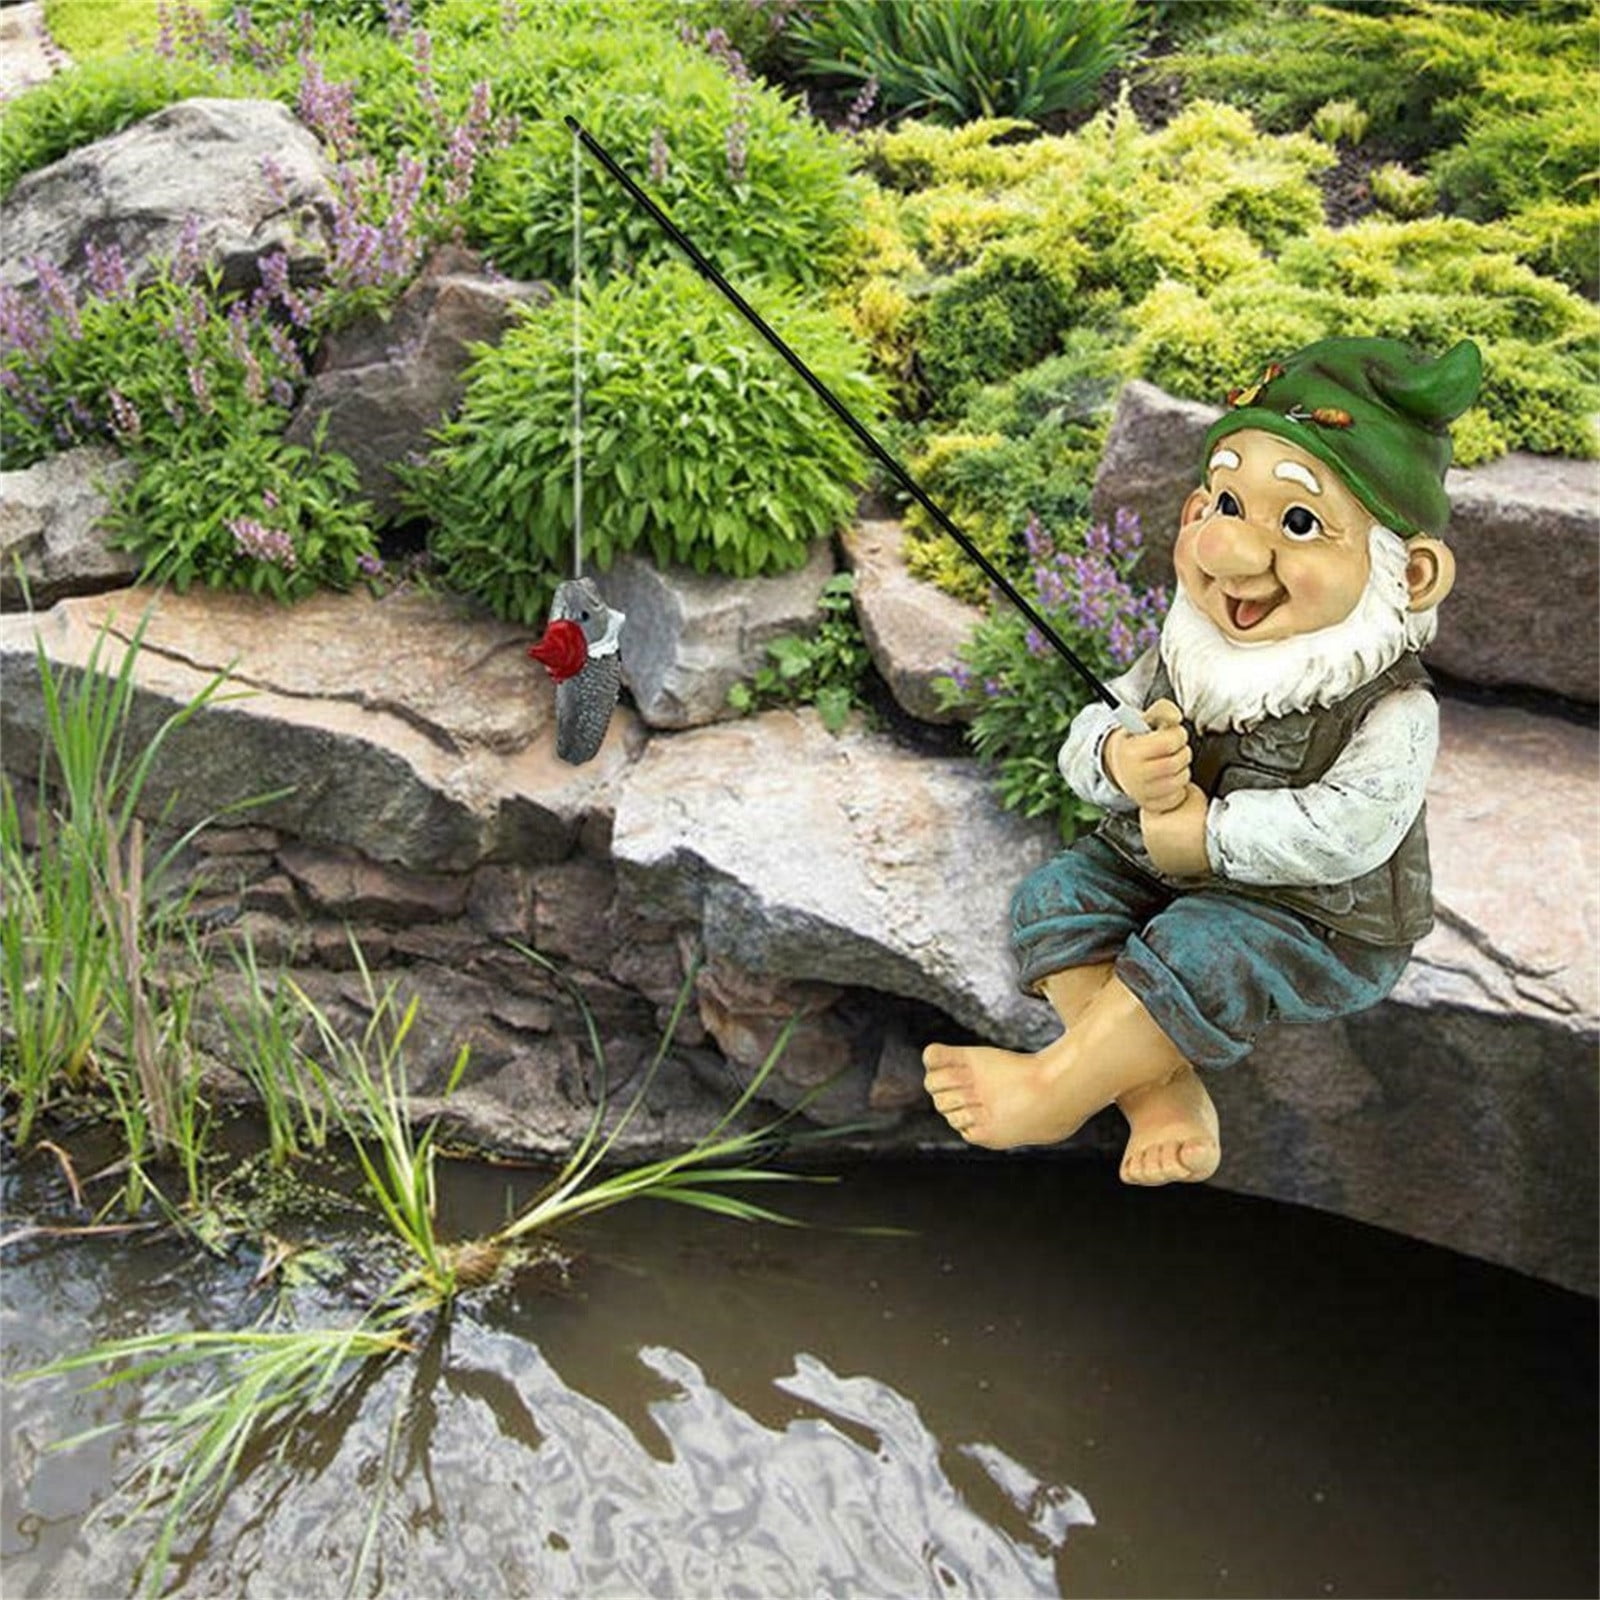 Childhood Days of Fishing Caught Fish Little Gnome Garden Desk Pond Statue 